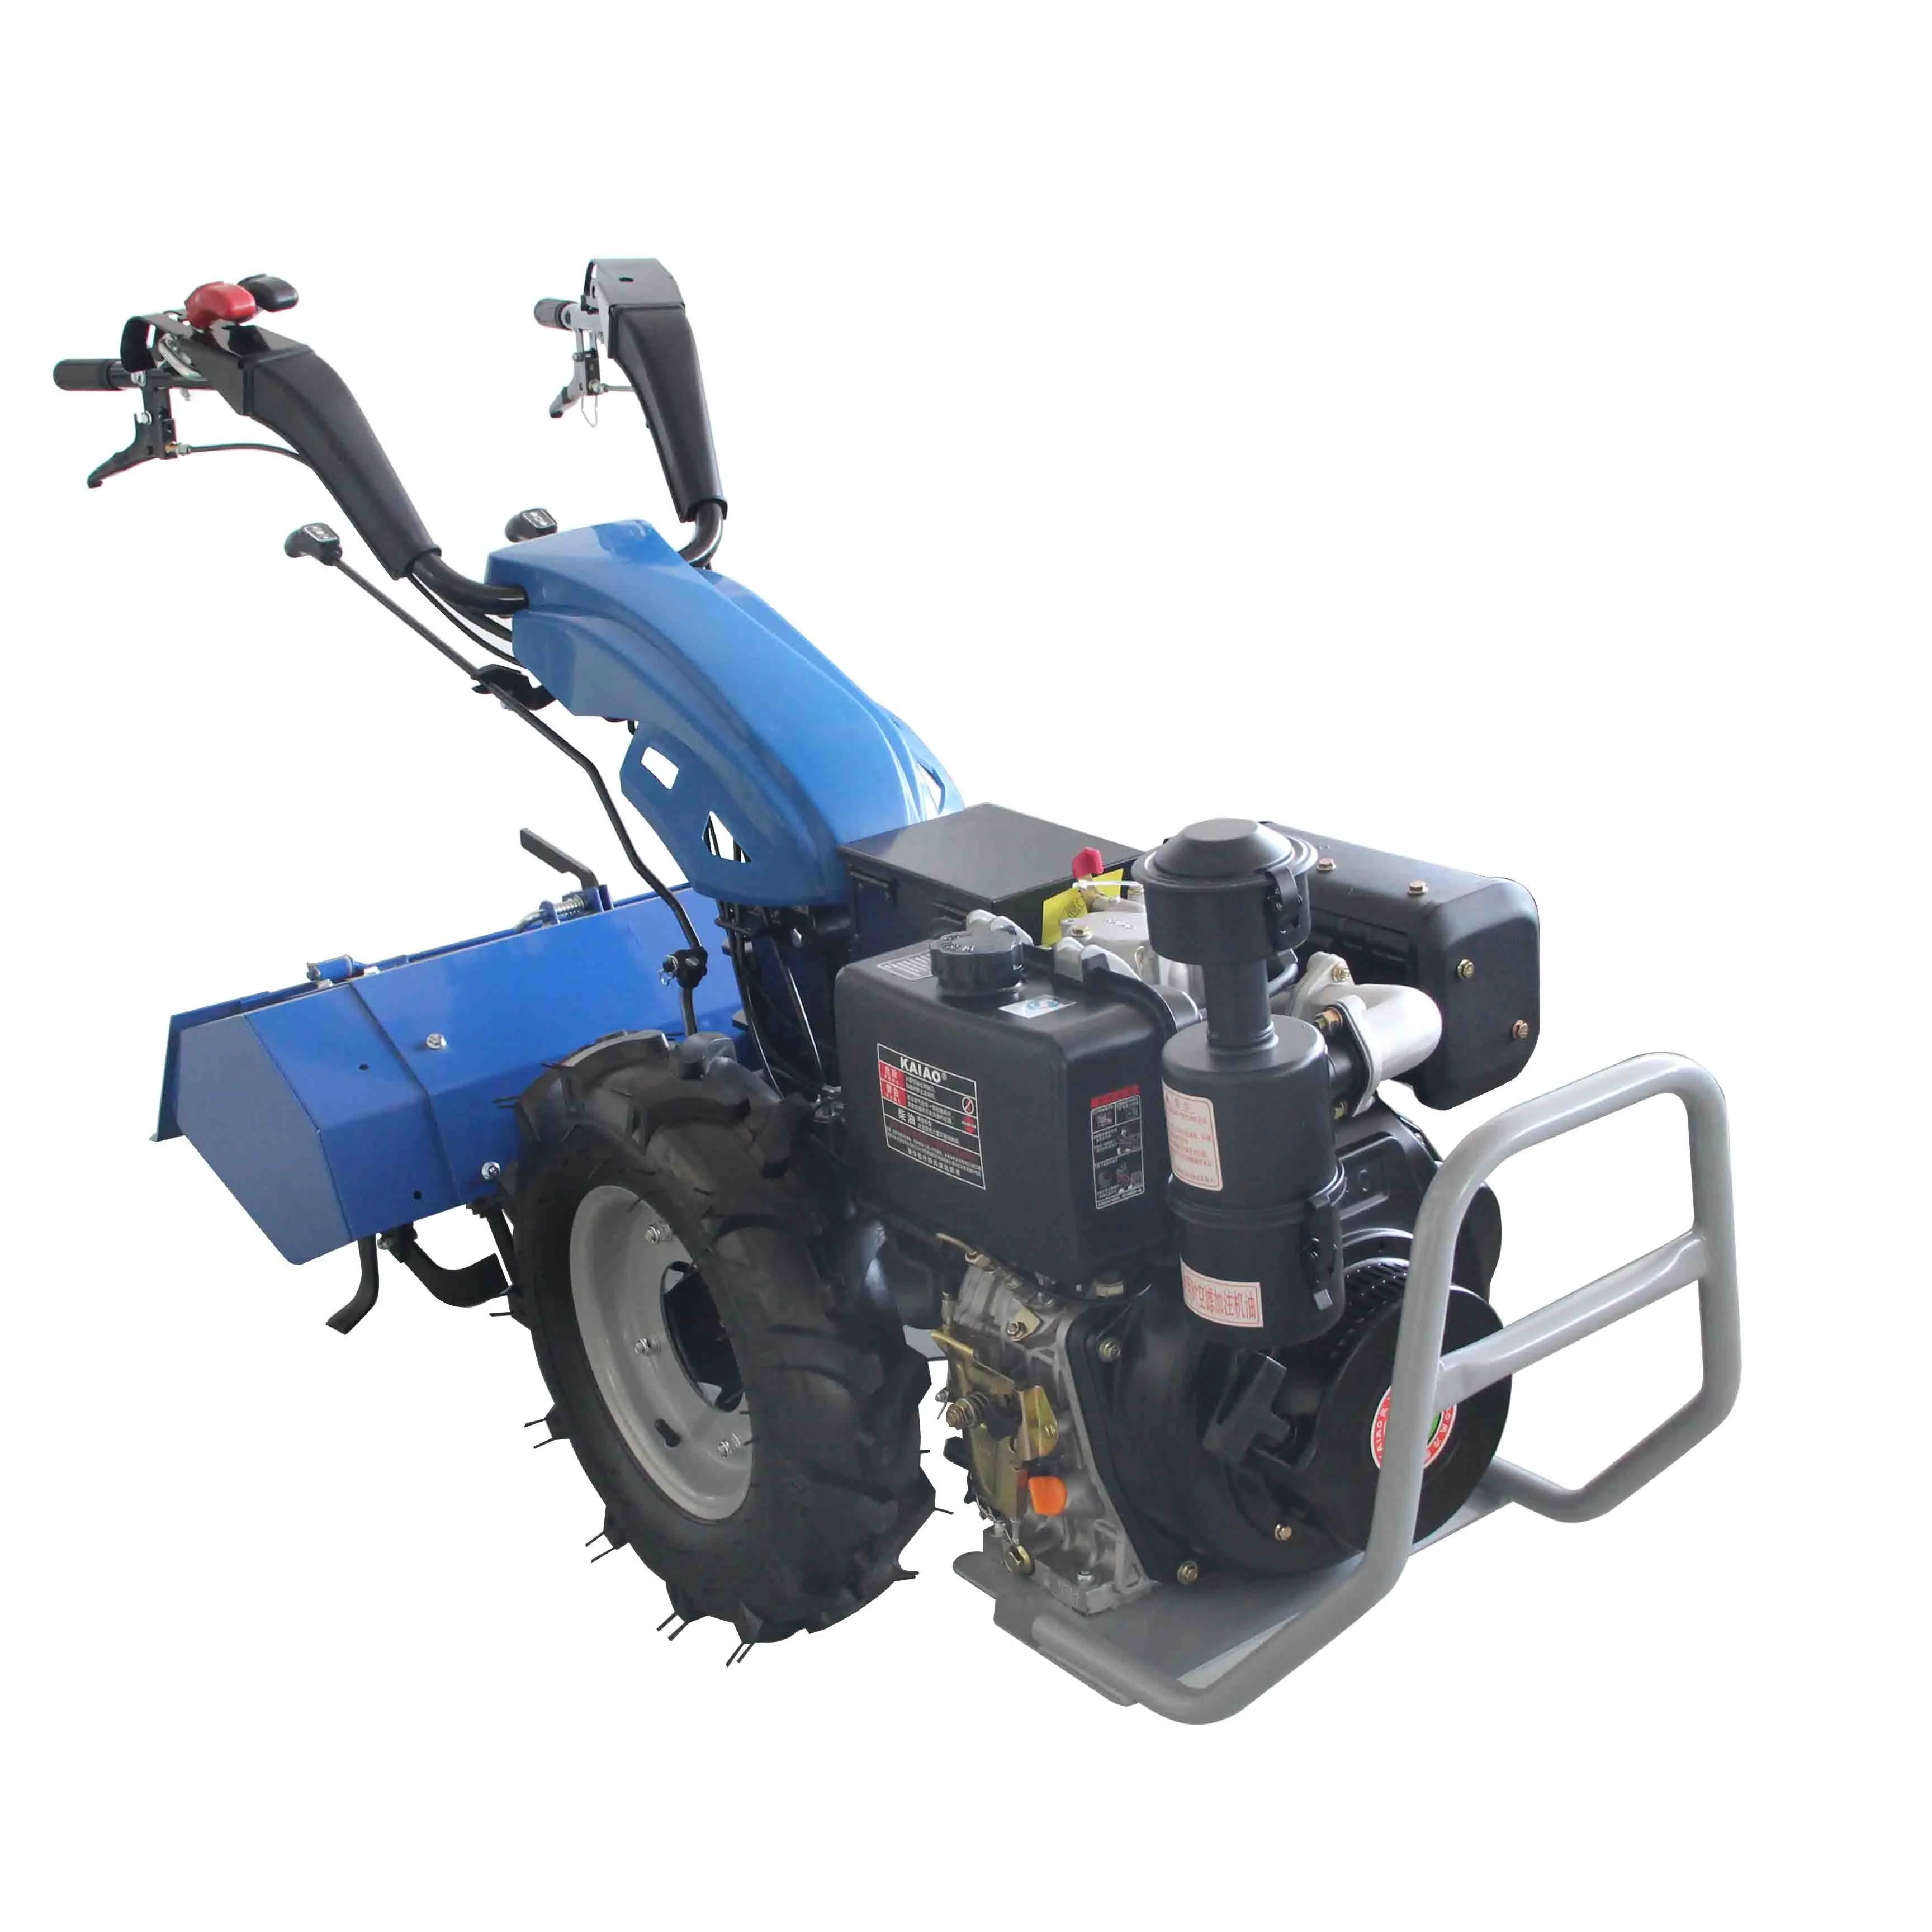 Mini tractor de dos ruedas de potencia pequeña, fácil de operar, con conexión con diferentes accesorios